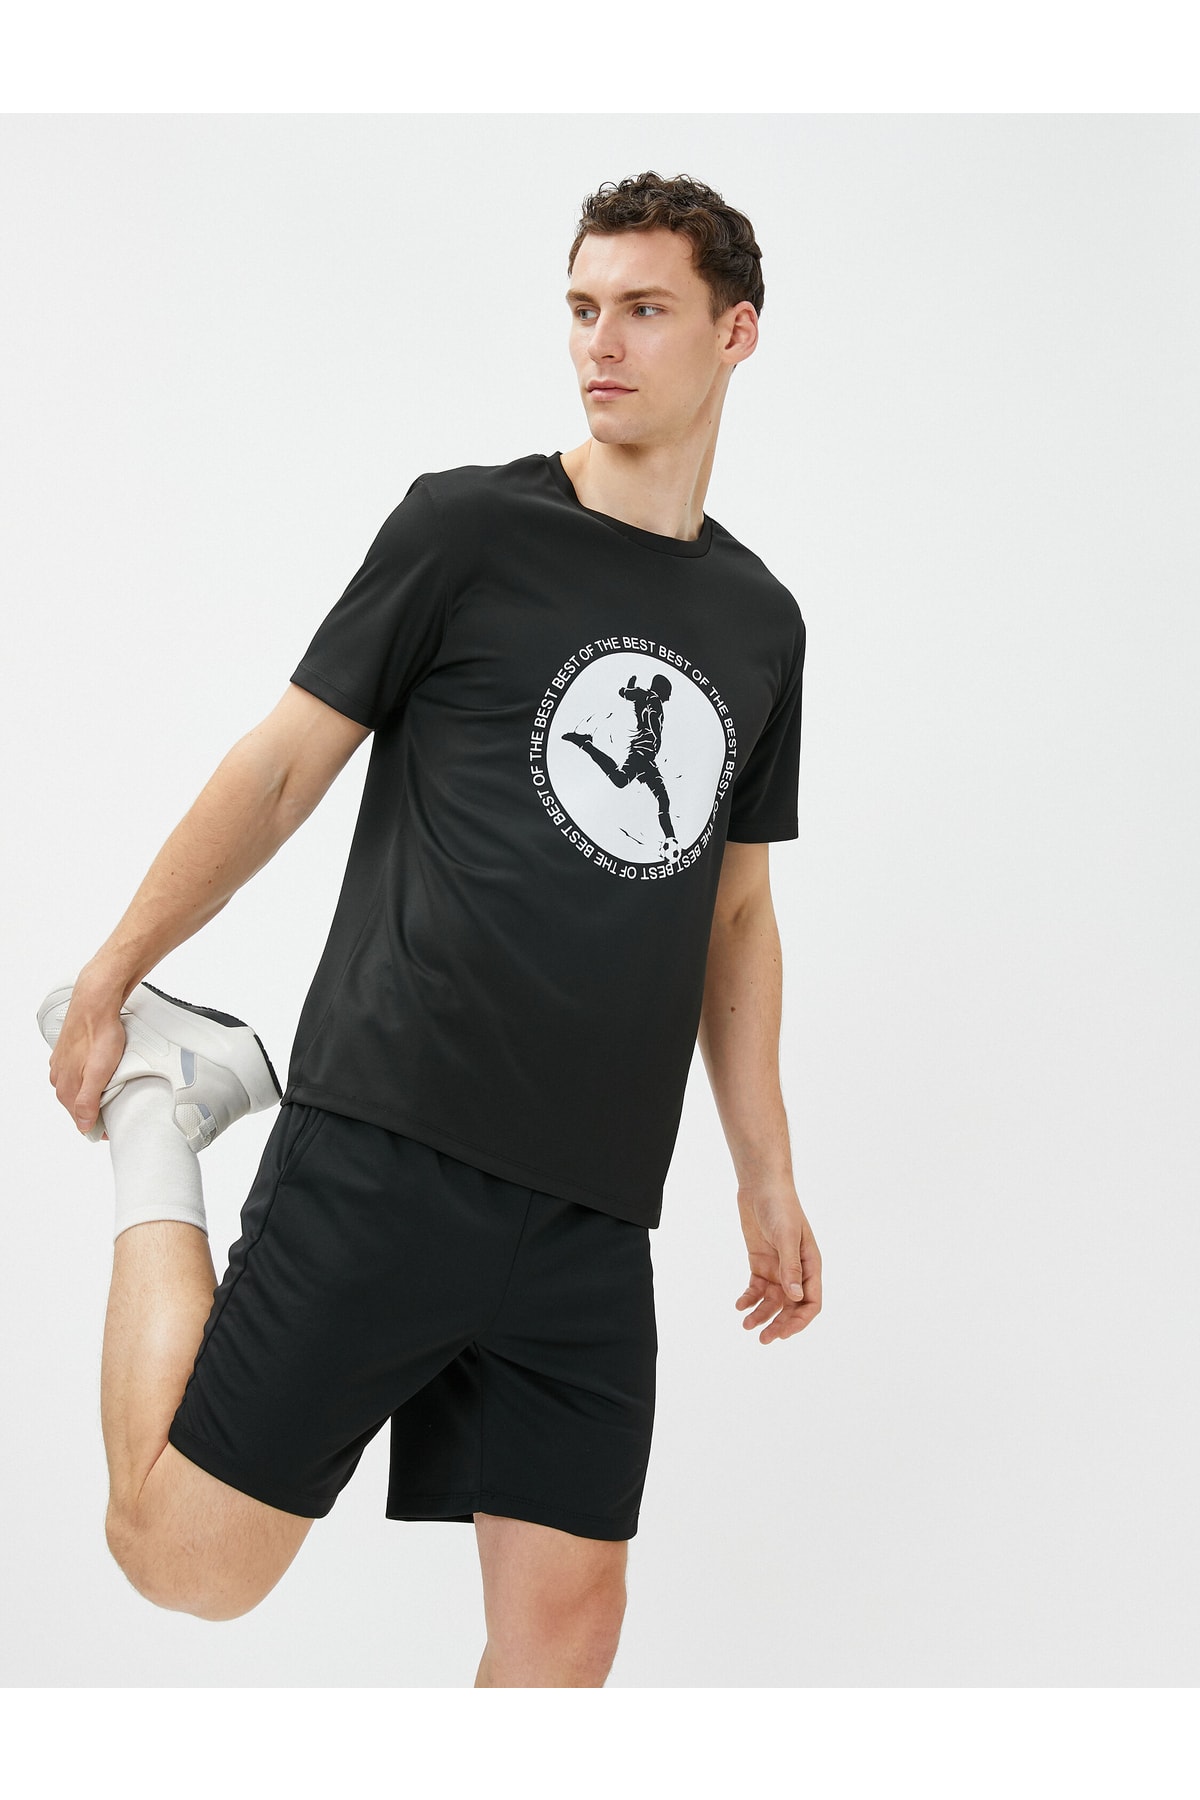 Koton Sports T-Shirt Printed Football Theme Crew Neck Short Sleeve